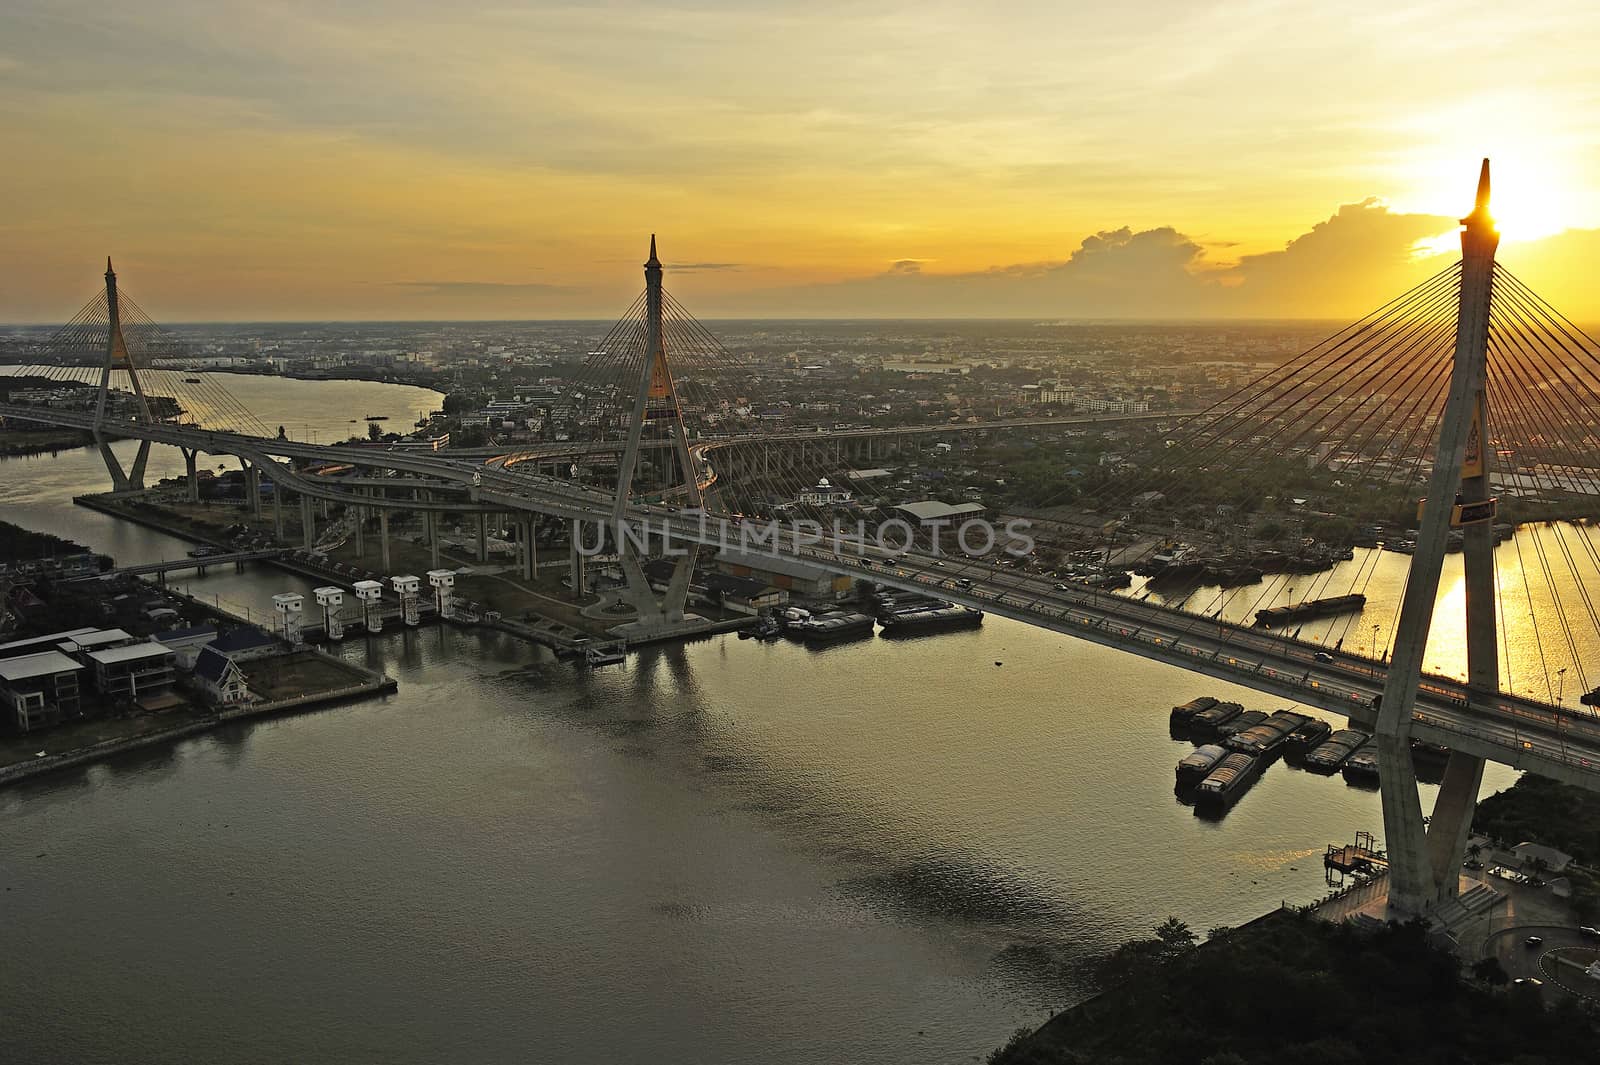 view of the Bhumibol bridge (Bangkok, Thailand)